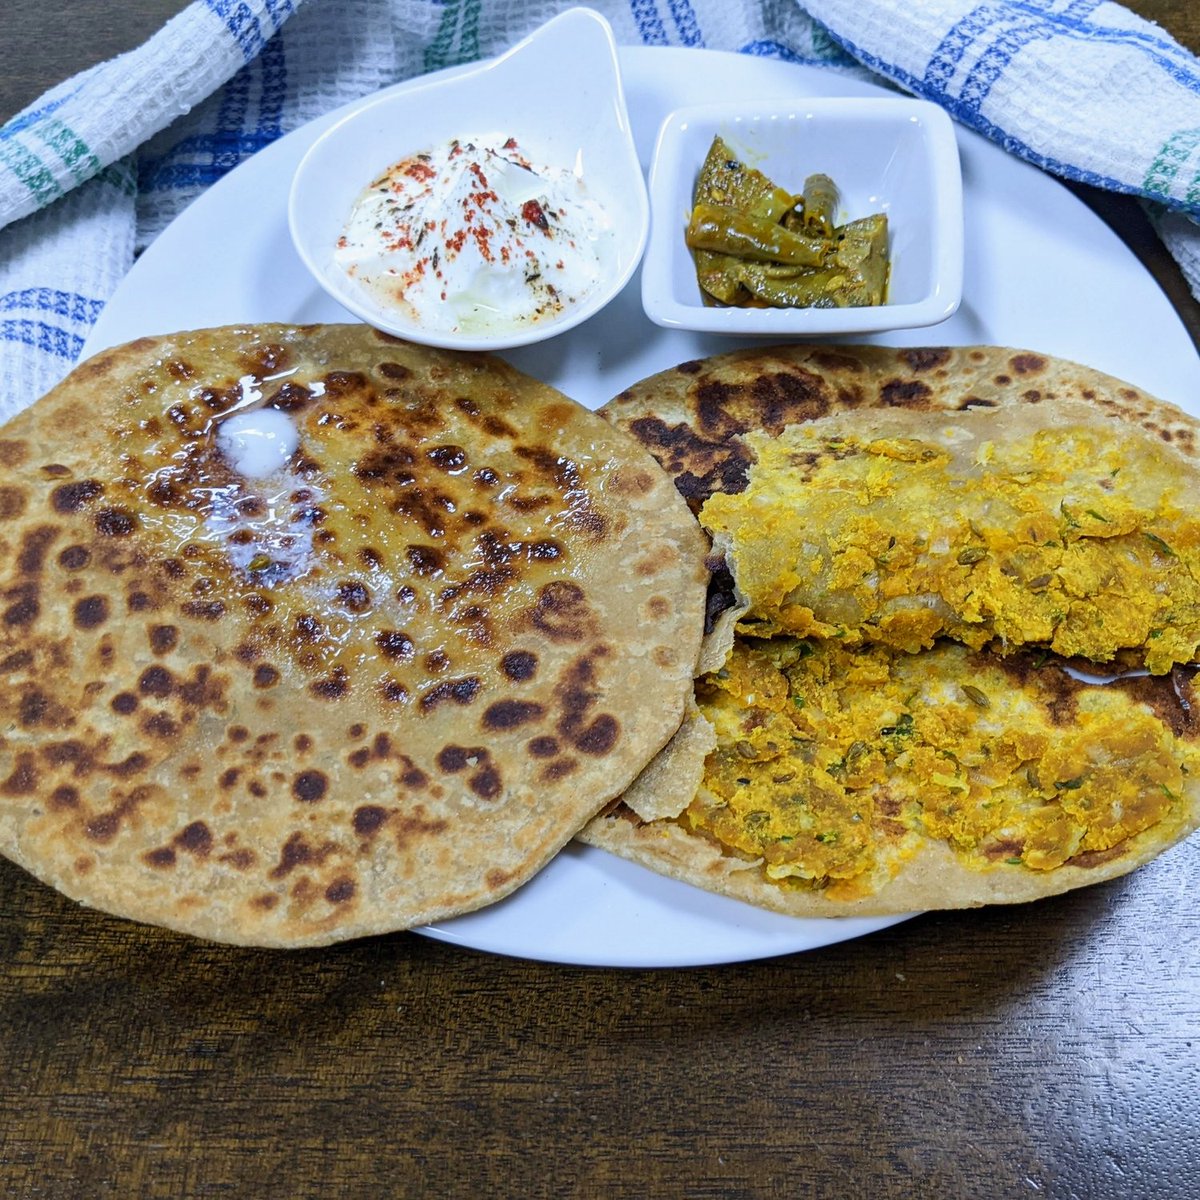 #food #foodblog #foodie #indianflatbread #biharirecipe #sattu #paratha #delicious #recipeshare #homecooked #FridayVibes
Recipe link : chhayasfood.com/home/bihari-sa…